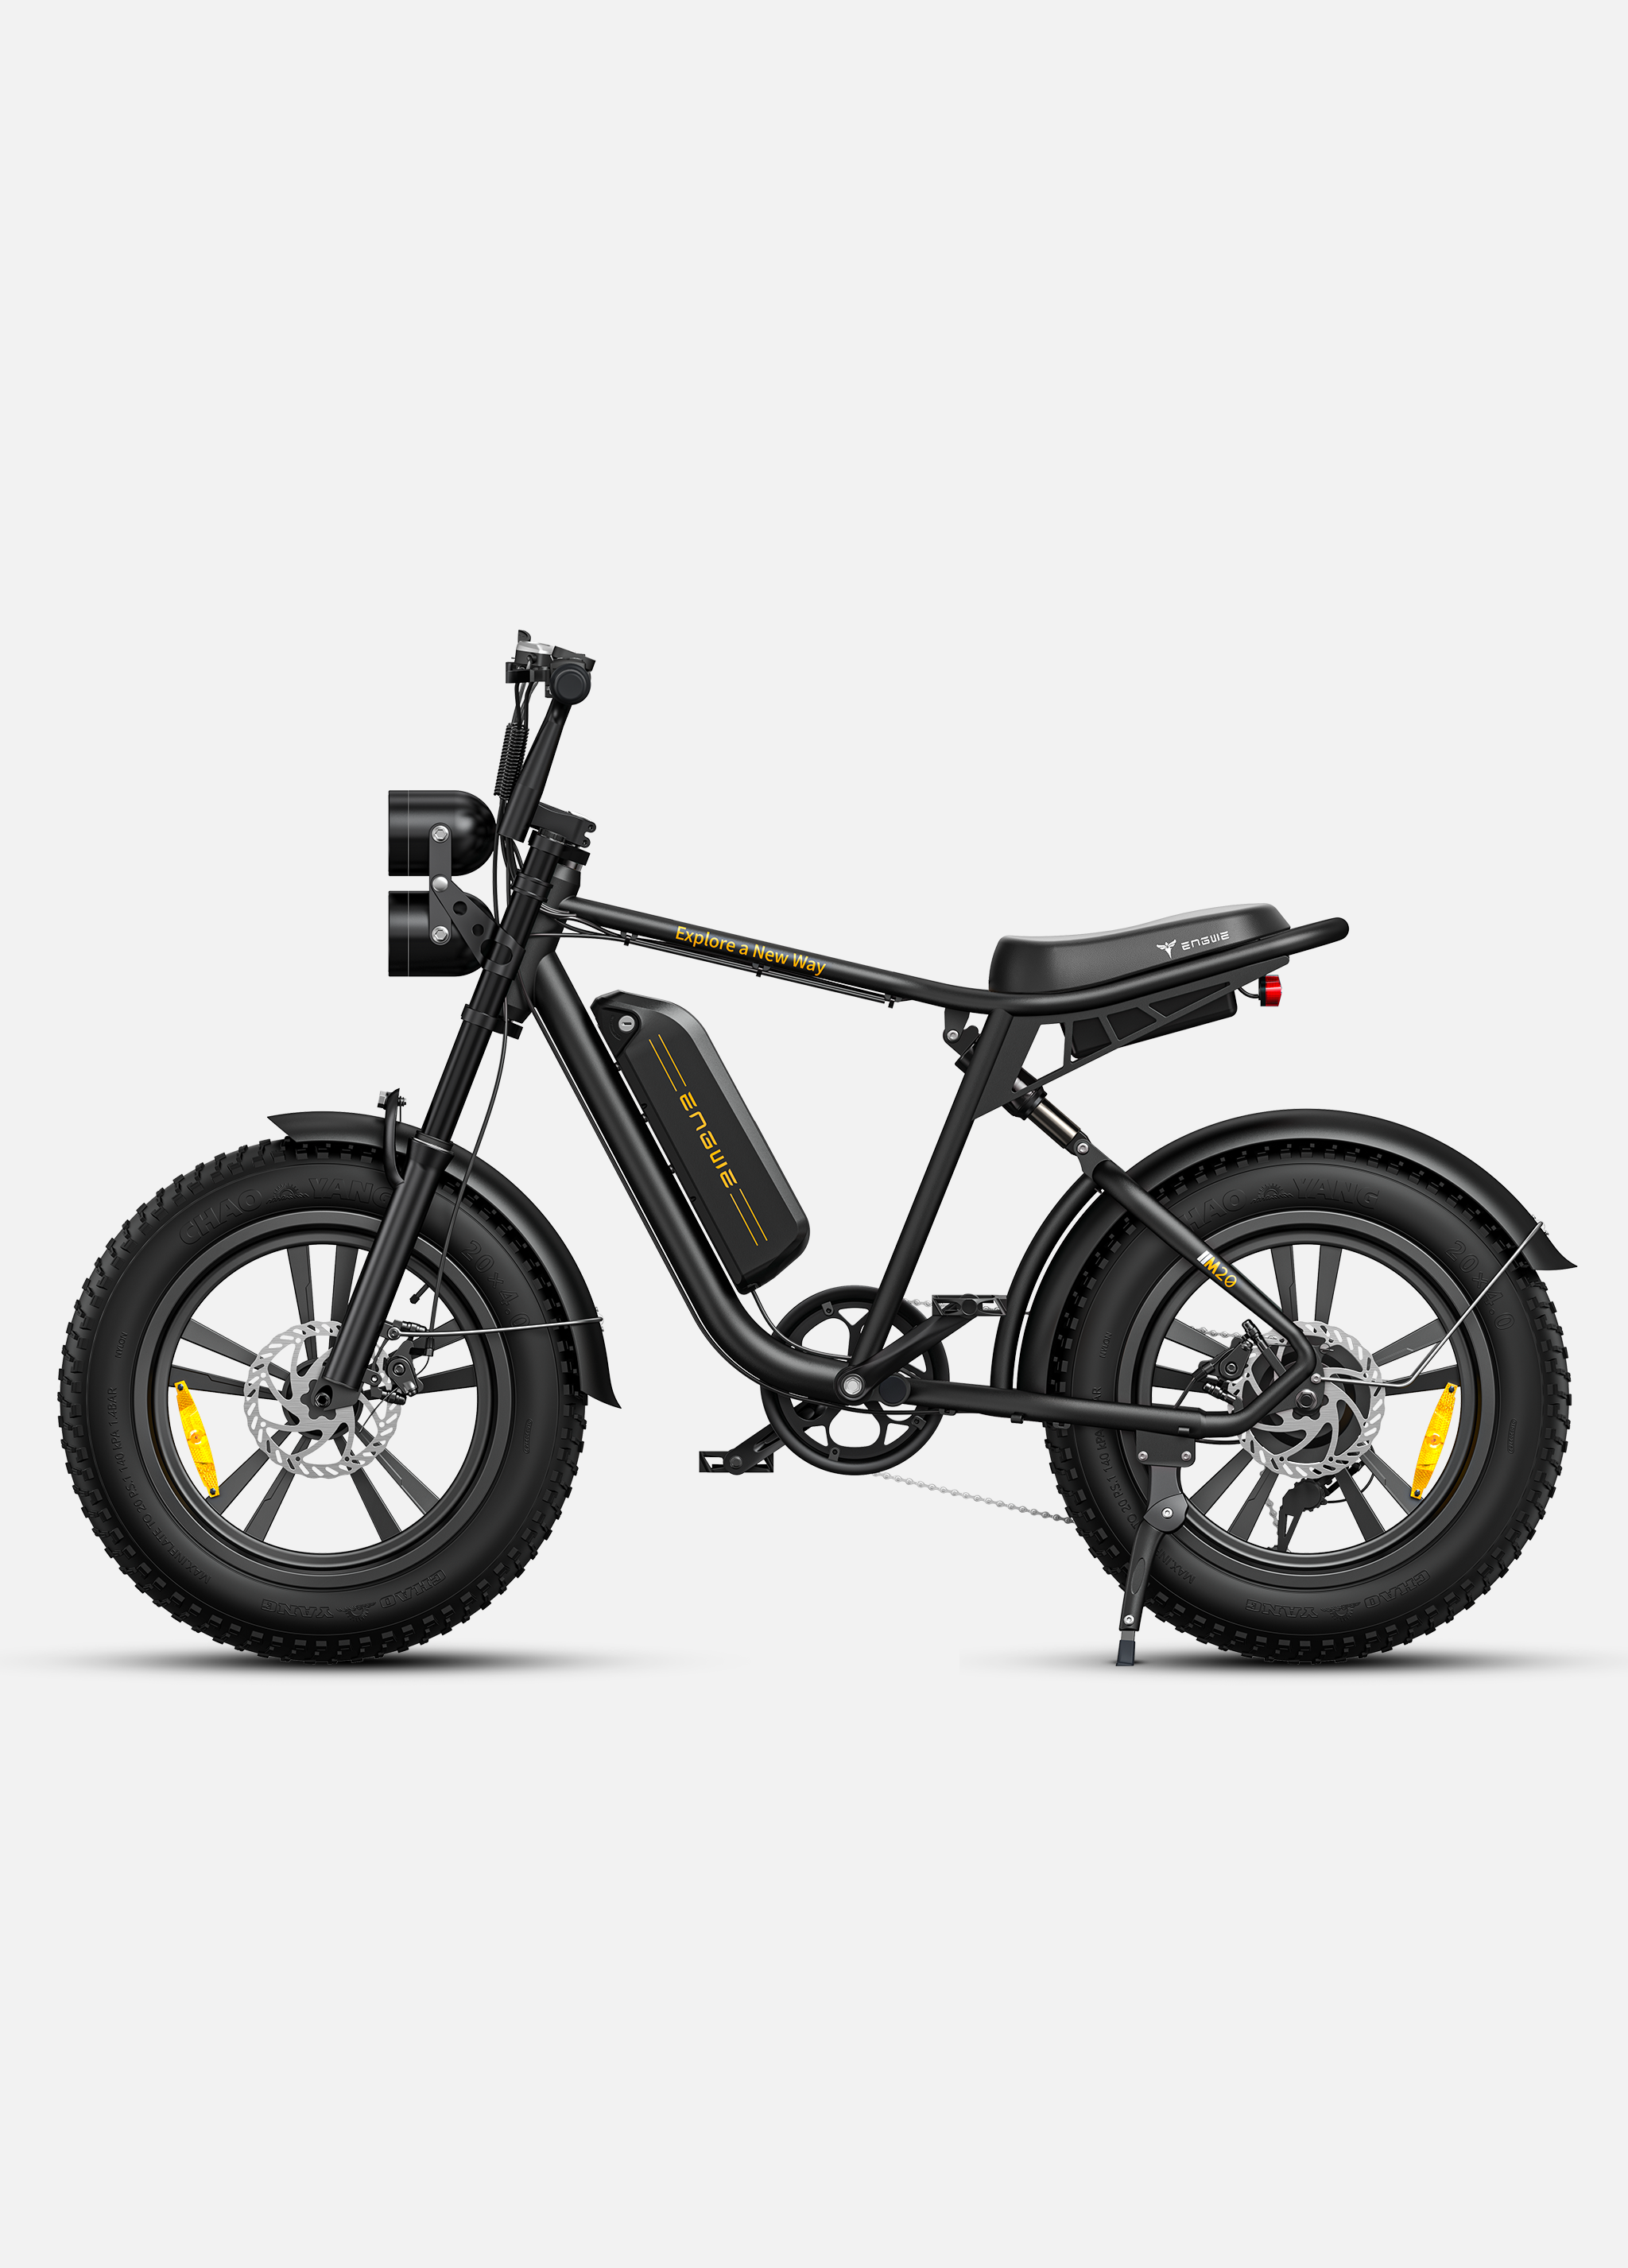 Engwe M20 e-bike review: Long range full-suspension electric bike